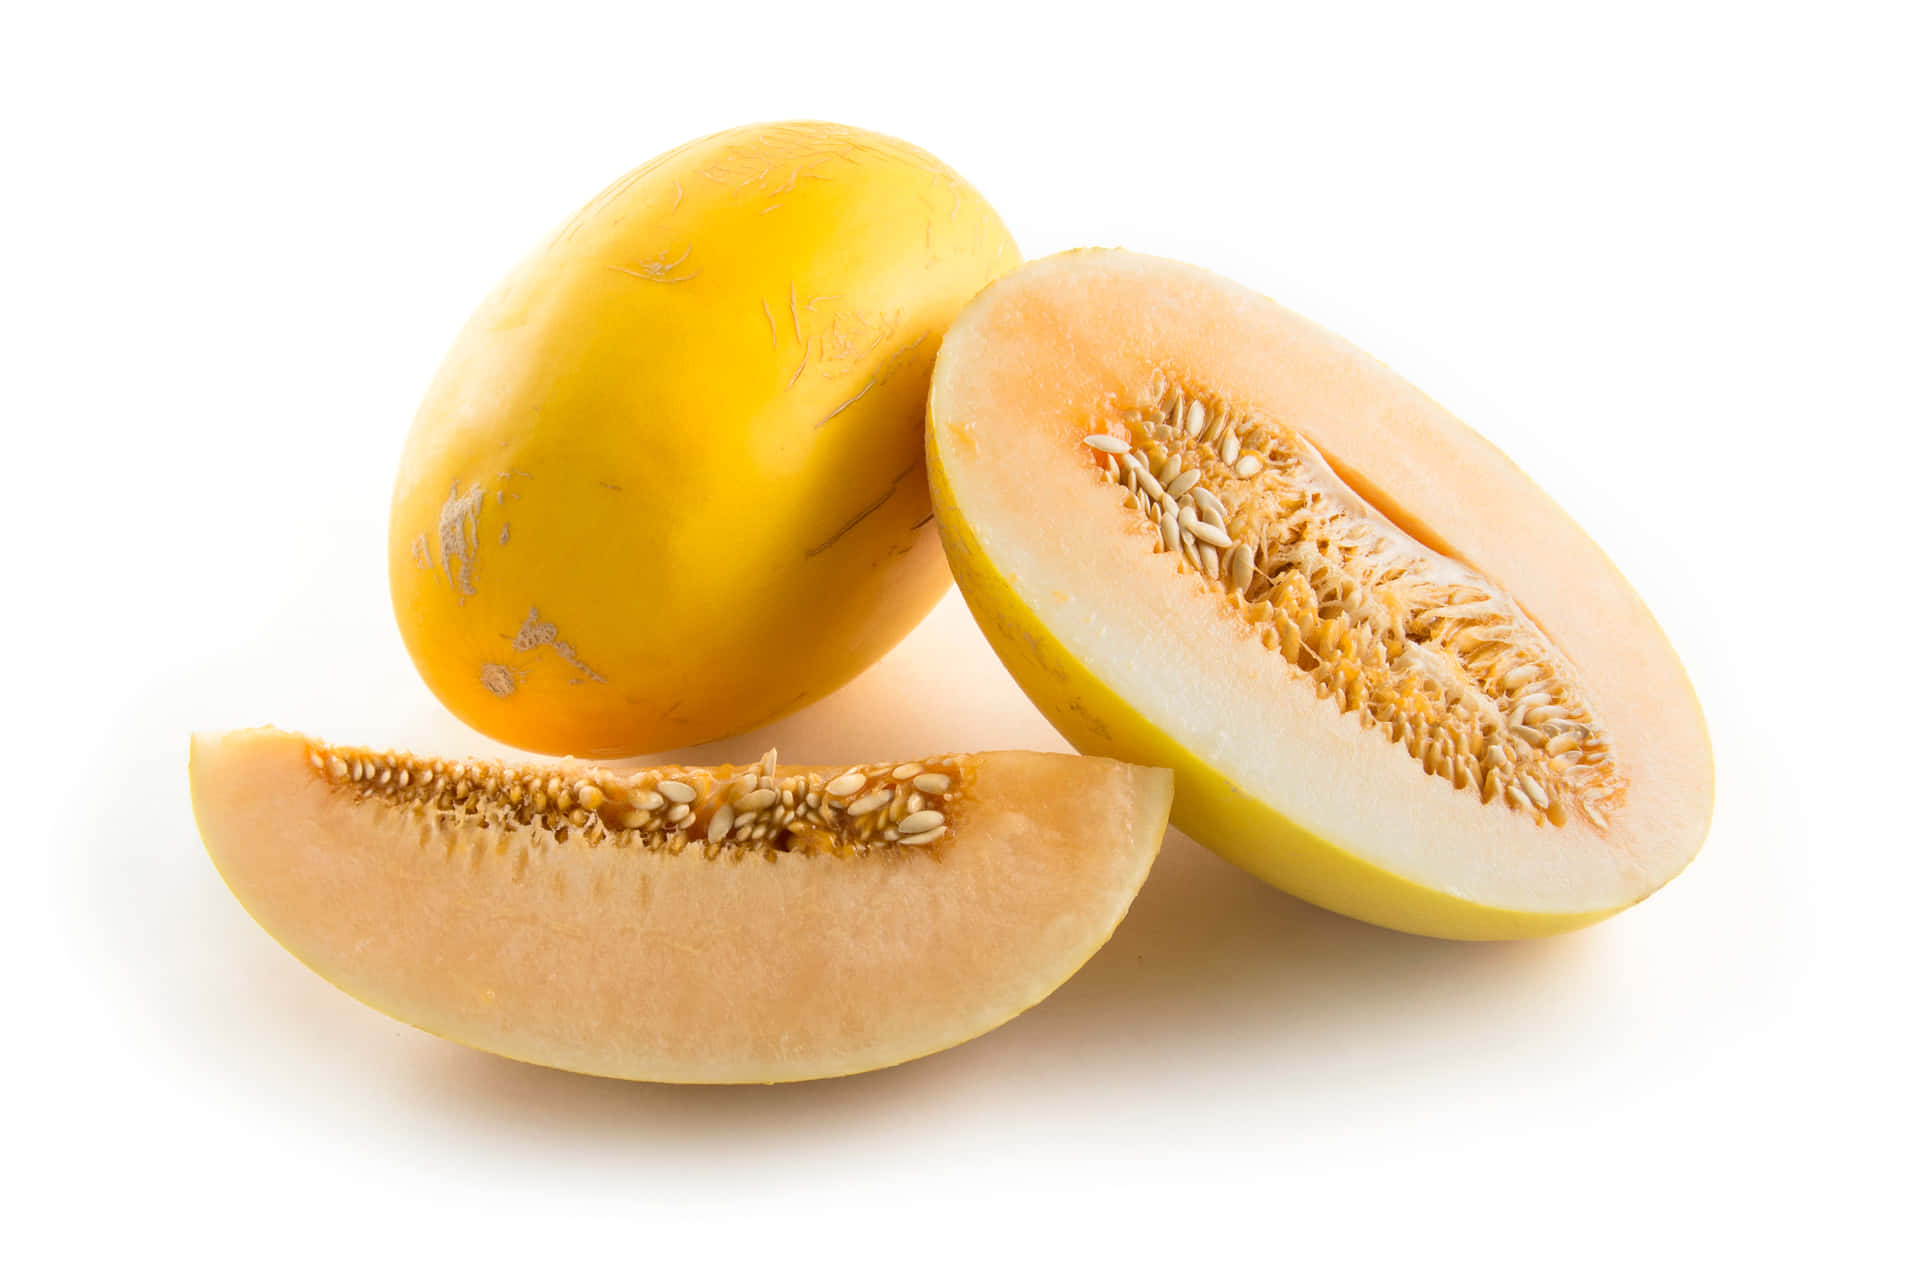 Gyllenecantaloupe-fruit Crenshaw Meloner. Wallpaper